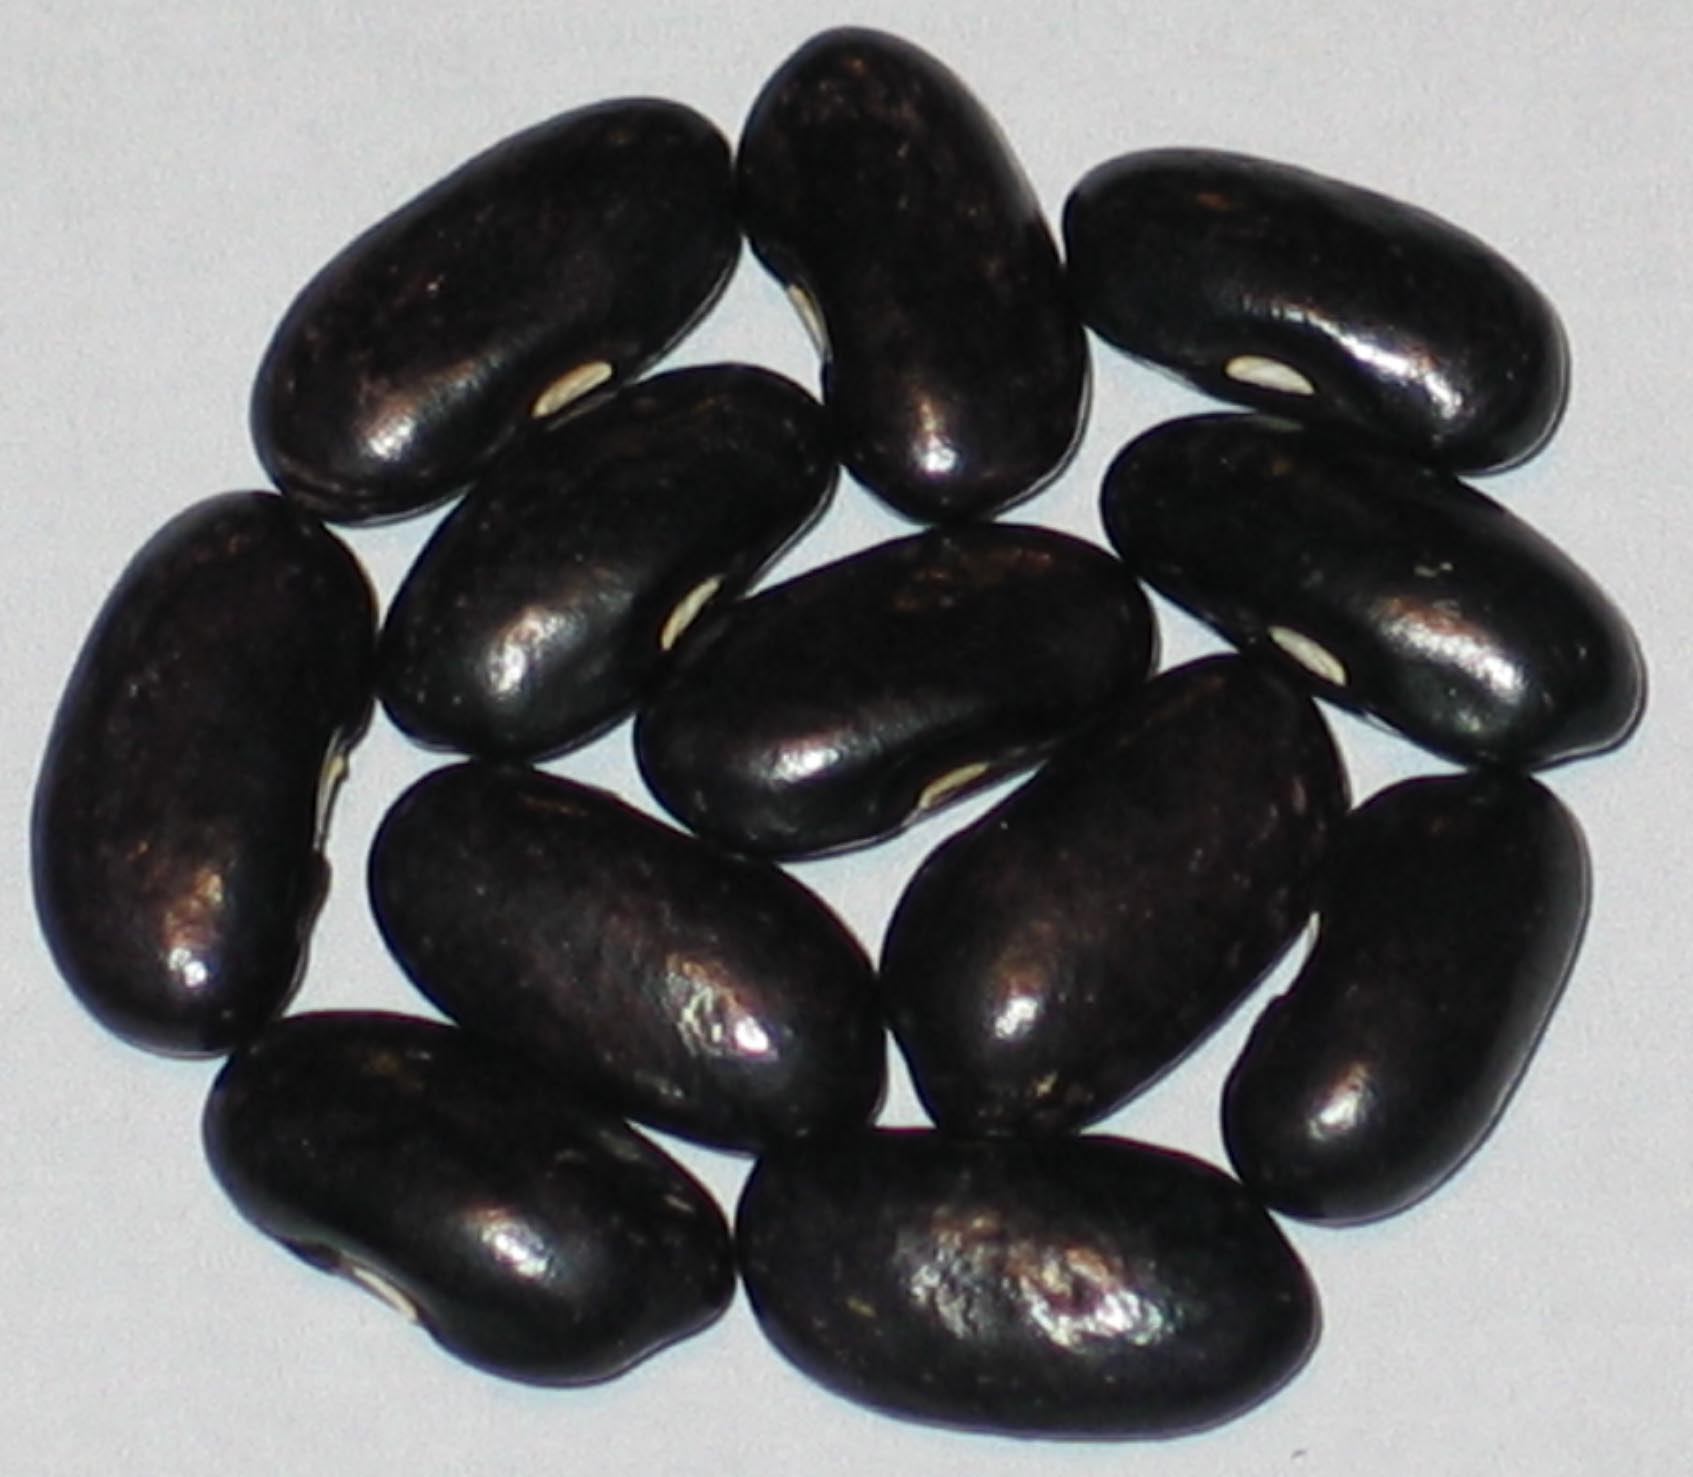 image of Tallulah's Treasure beans